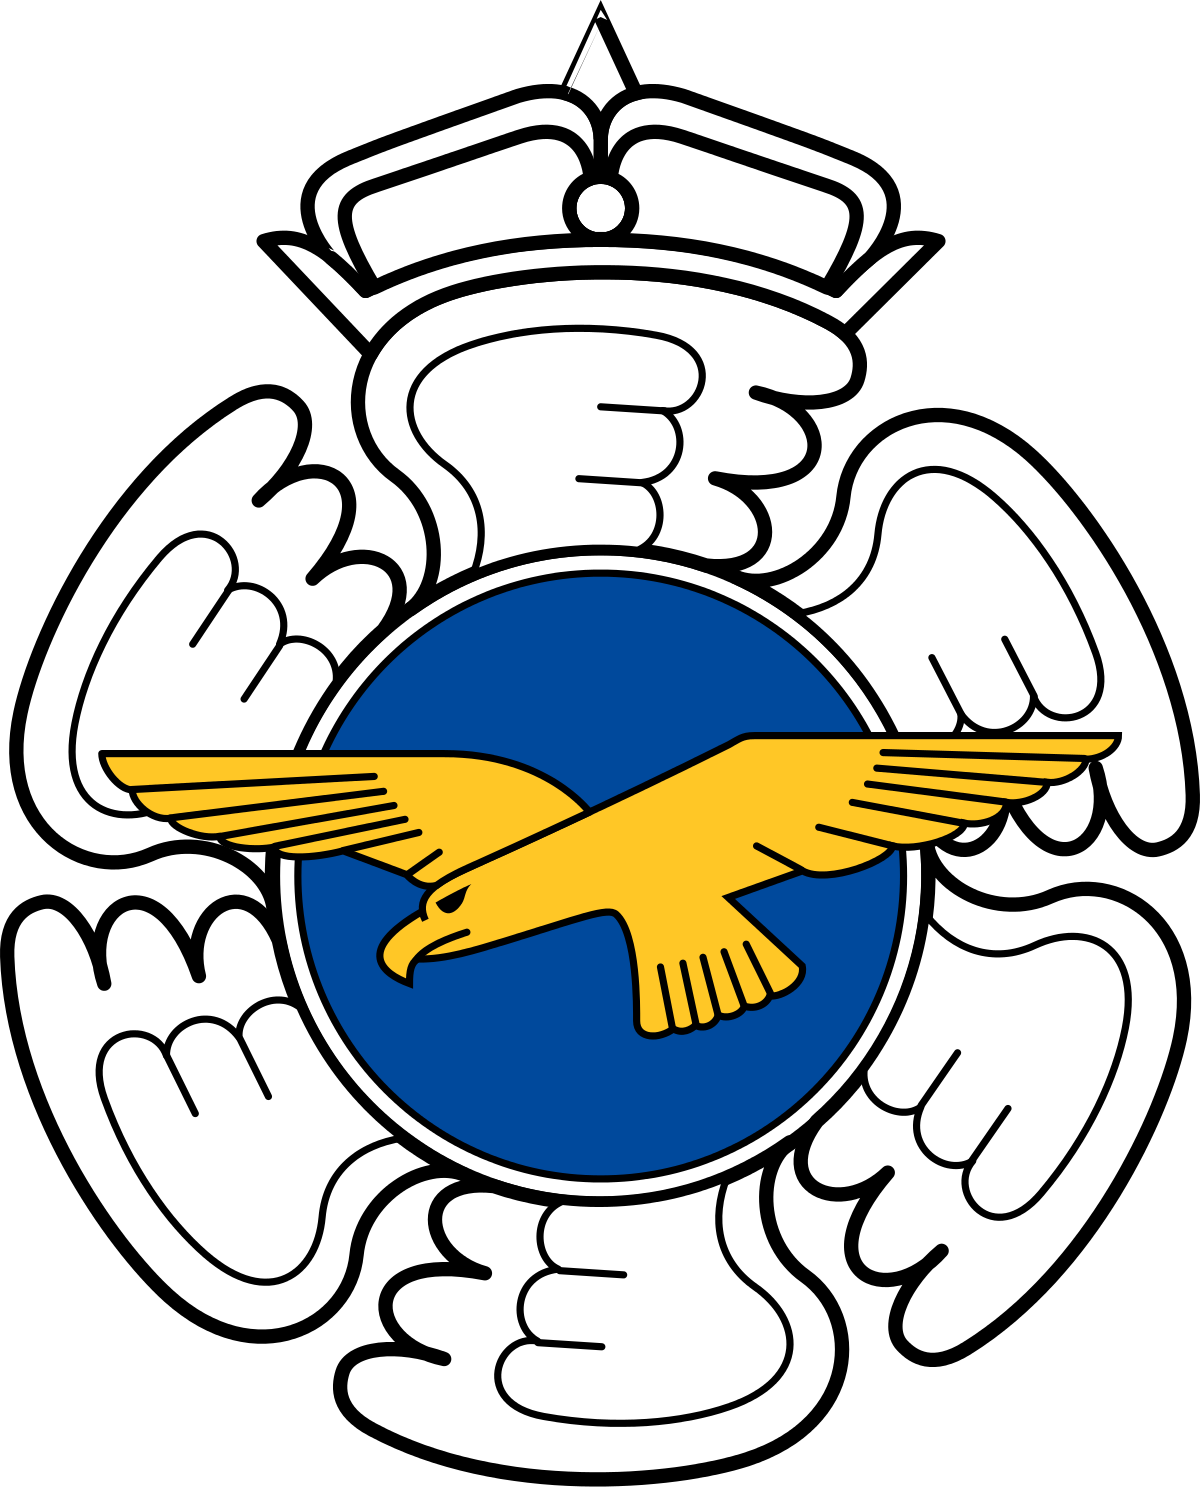 Finnish Air Force Emblem (1200x1487)